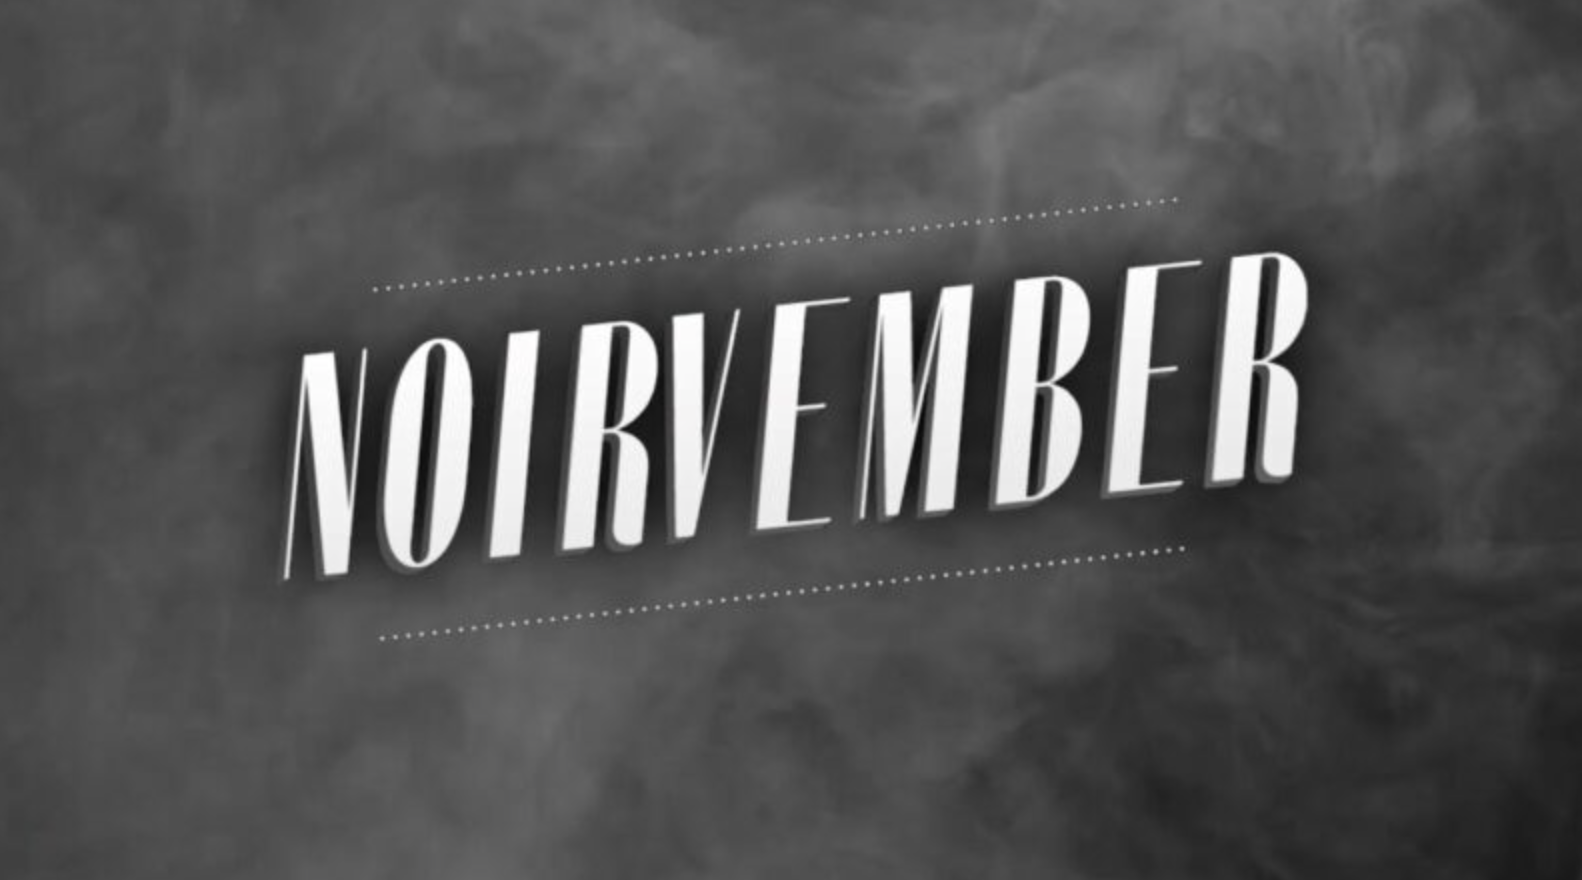 Niorvember: A Retrospective on film by Tyler Smith